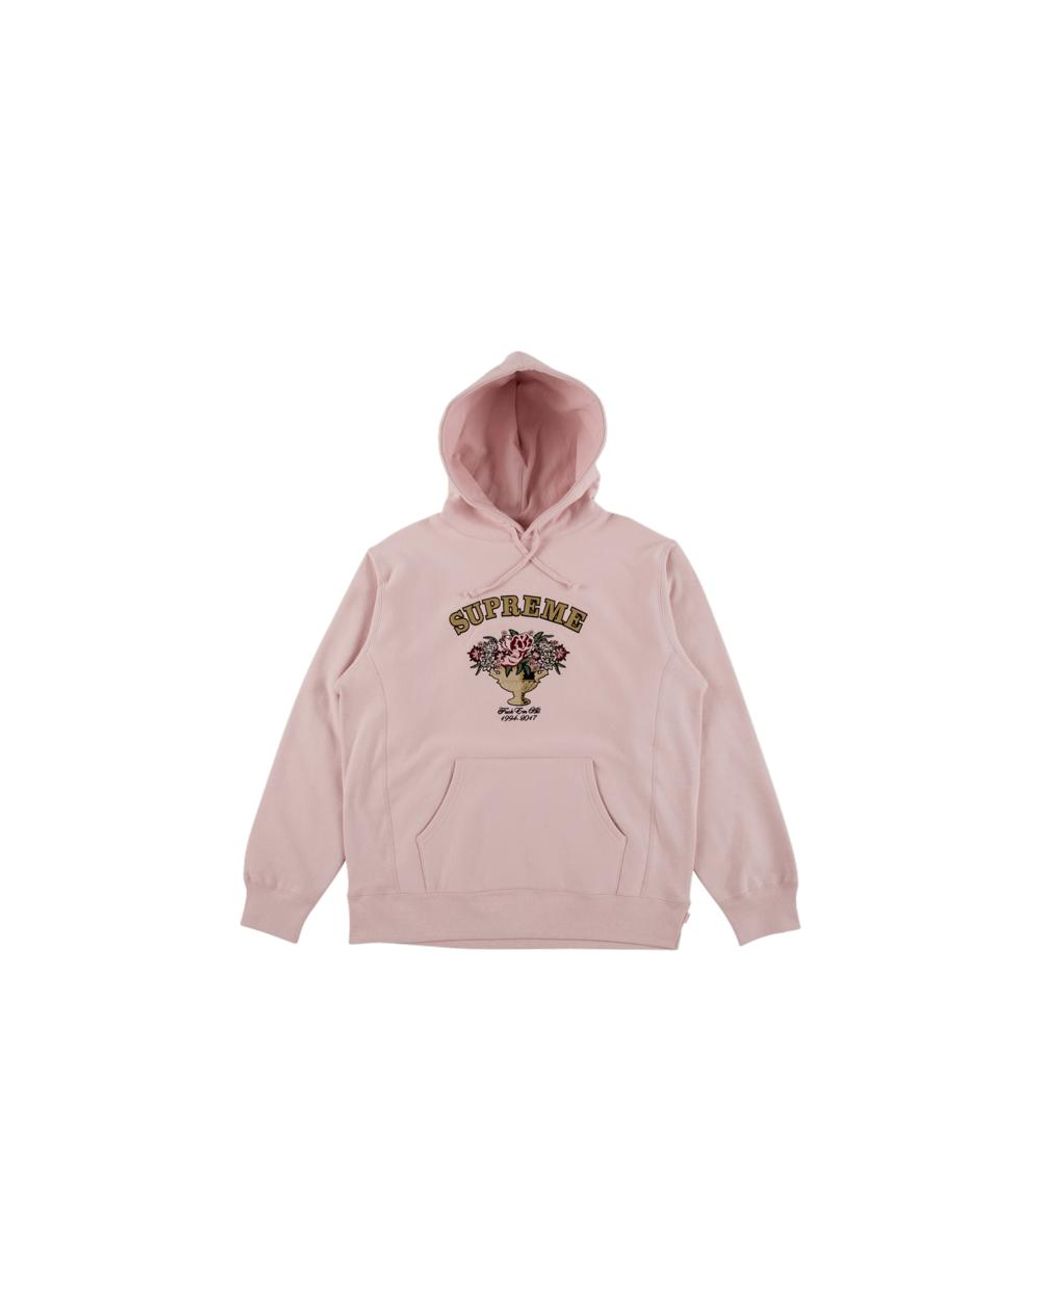 Supreme Centerpiece Hooded Sweatshirt in Pale Pink (Pink) for Men - Lyst